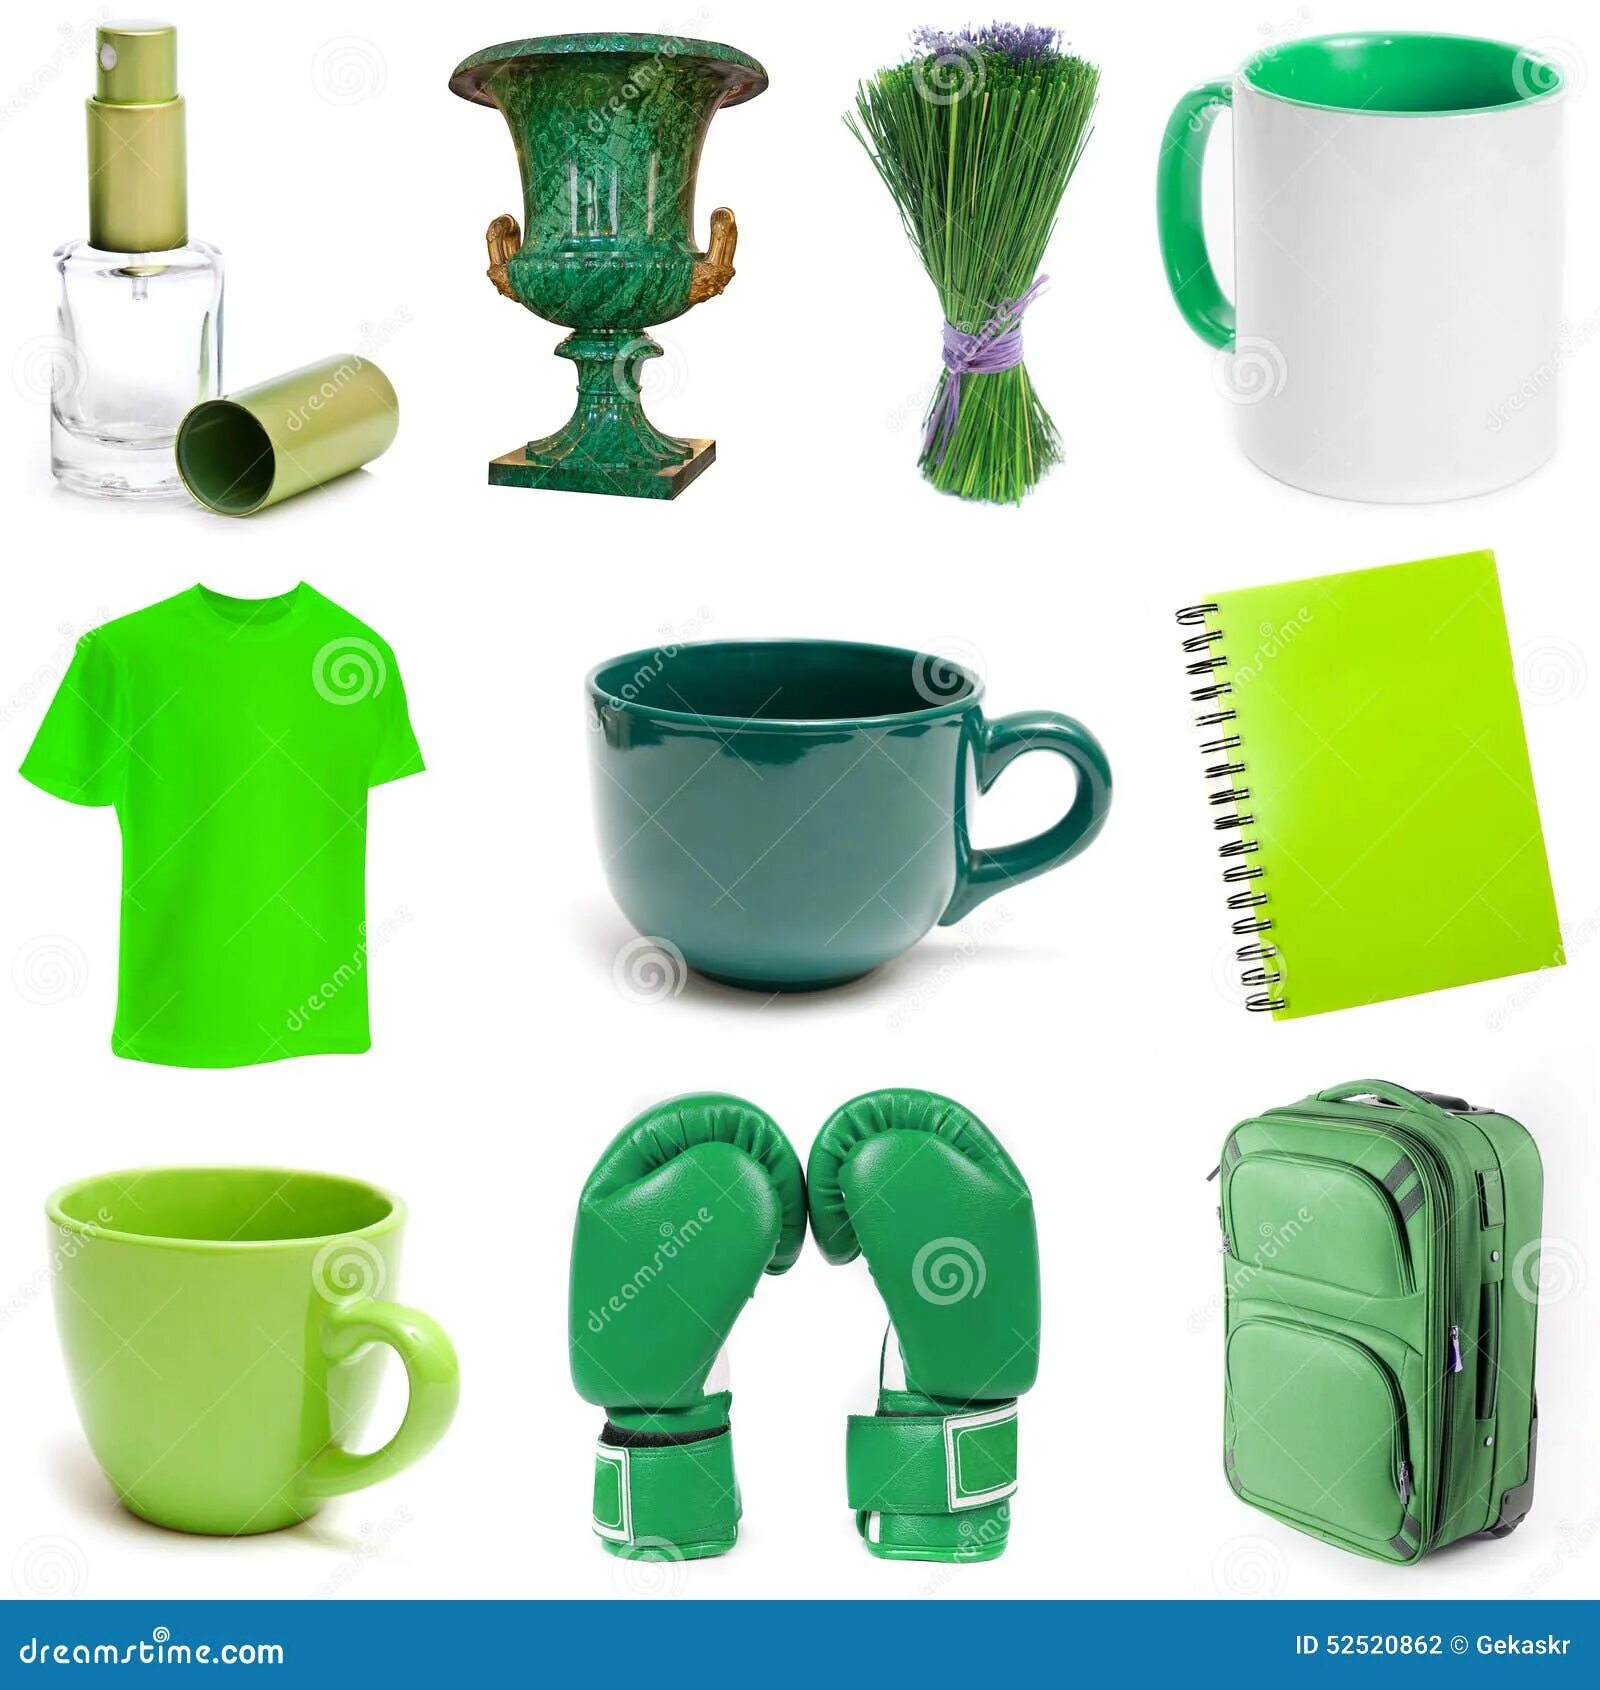 5 предметов зеленого цвета. Зеленые предметы. Предметы зеленого цвета. Предметы салатового цвета. Предметы зеленого цвета для детей.